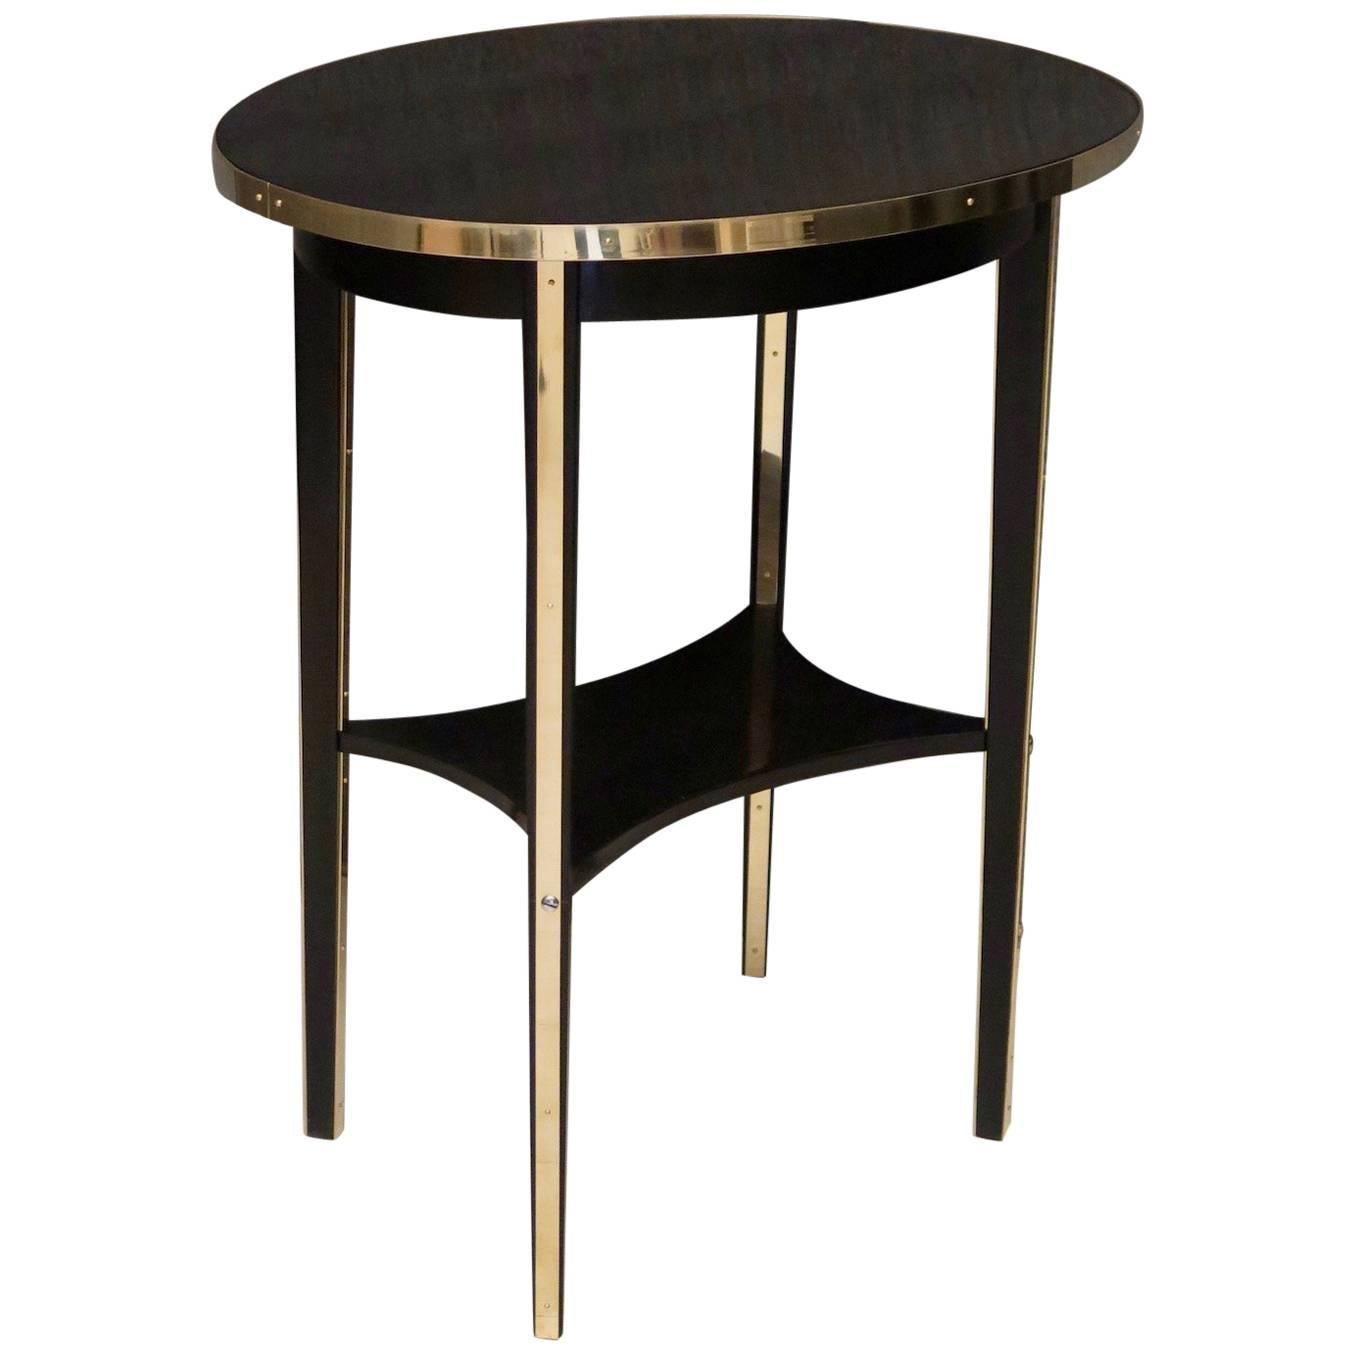 Thonet Oval Black Shellac and Brass Austrian Art Nouveau Side Table, 1910